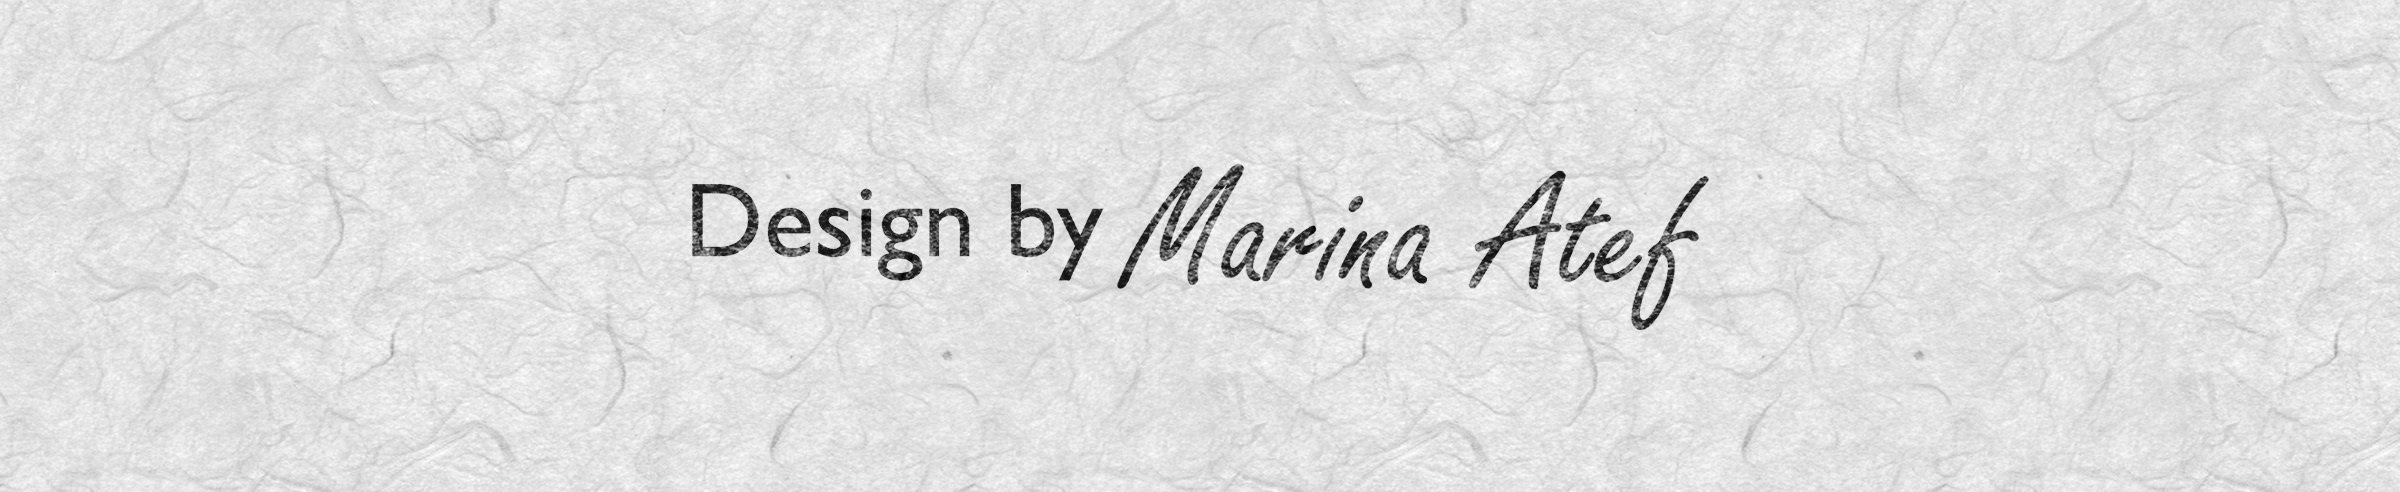 Marina Atef's profile banner